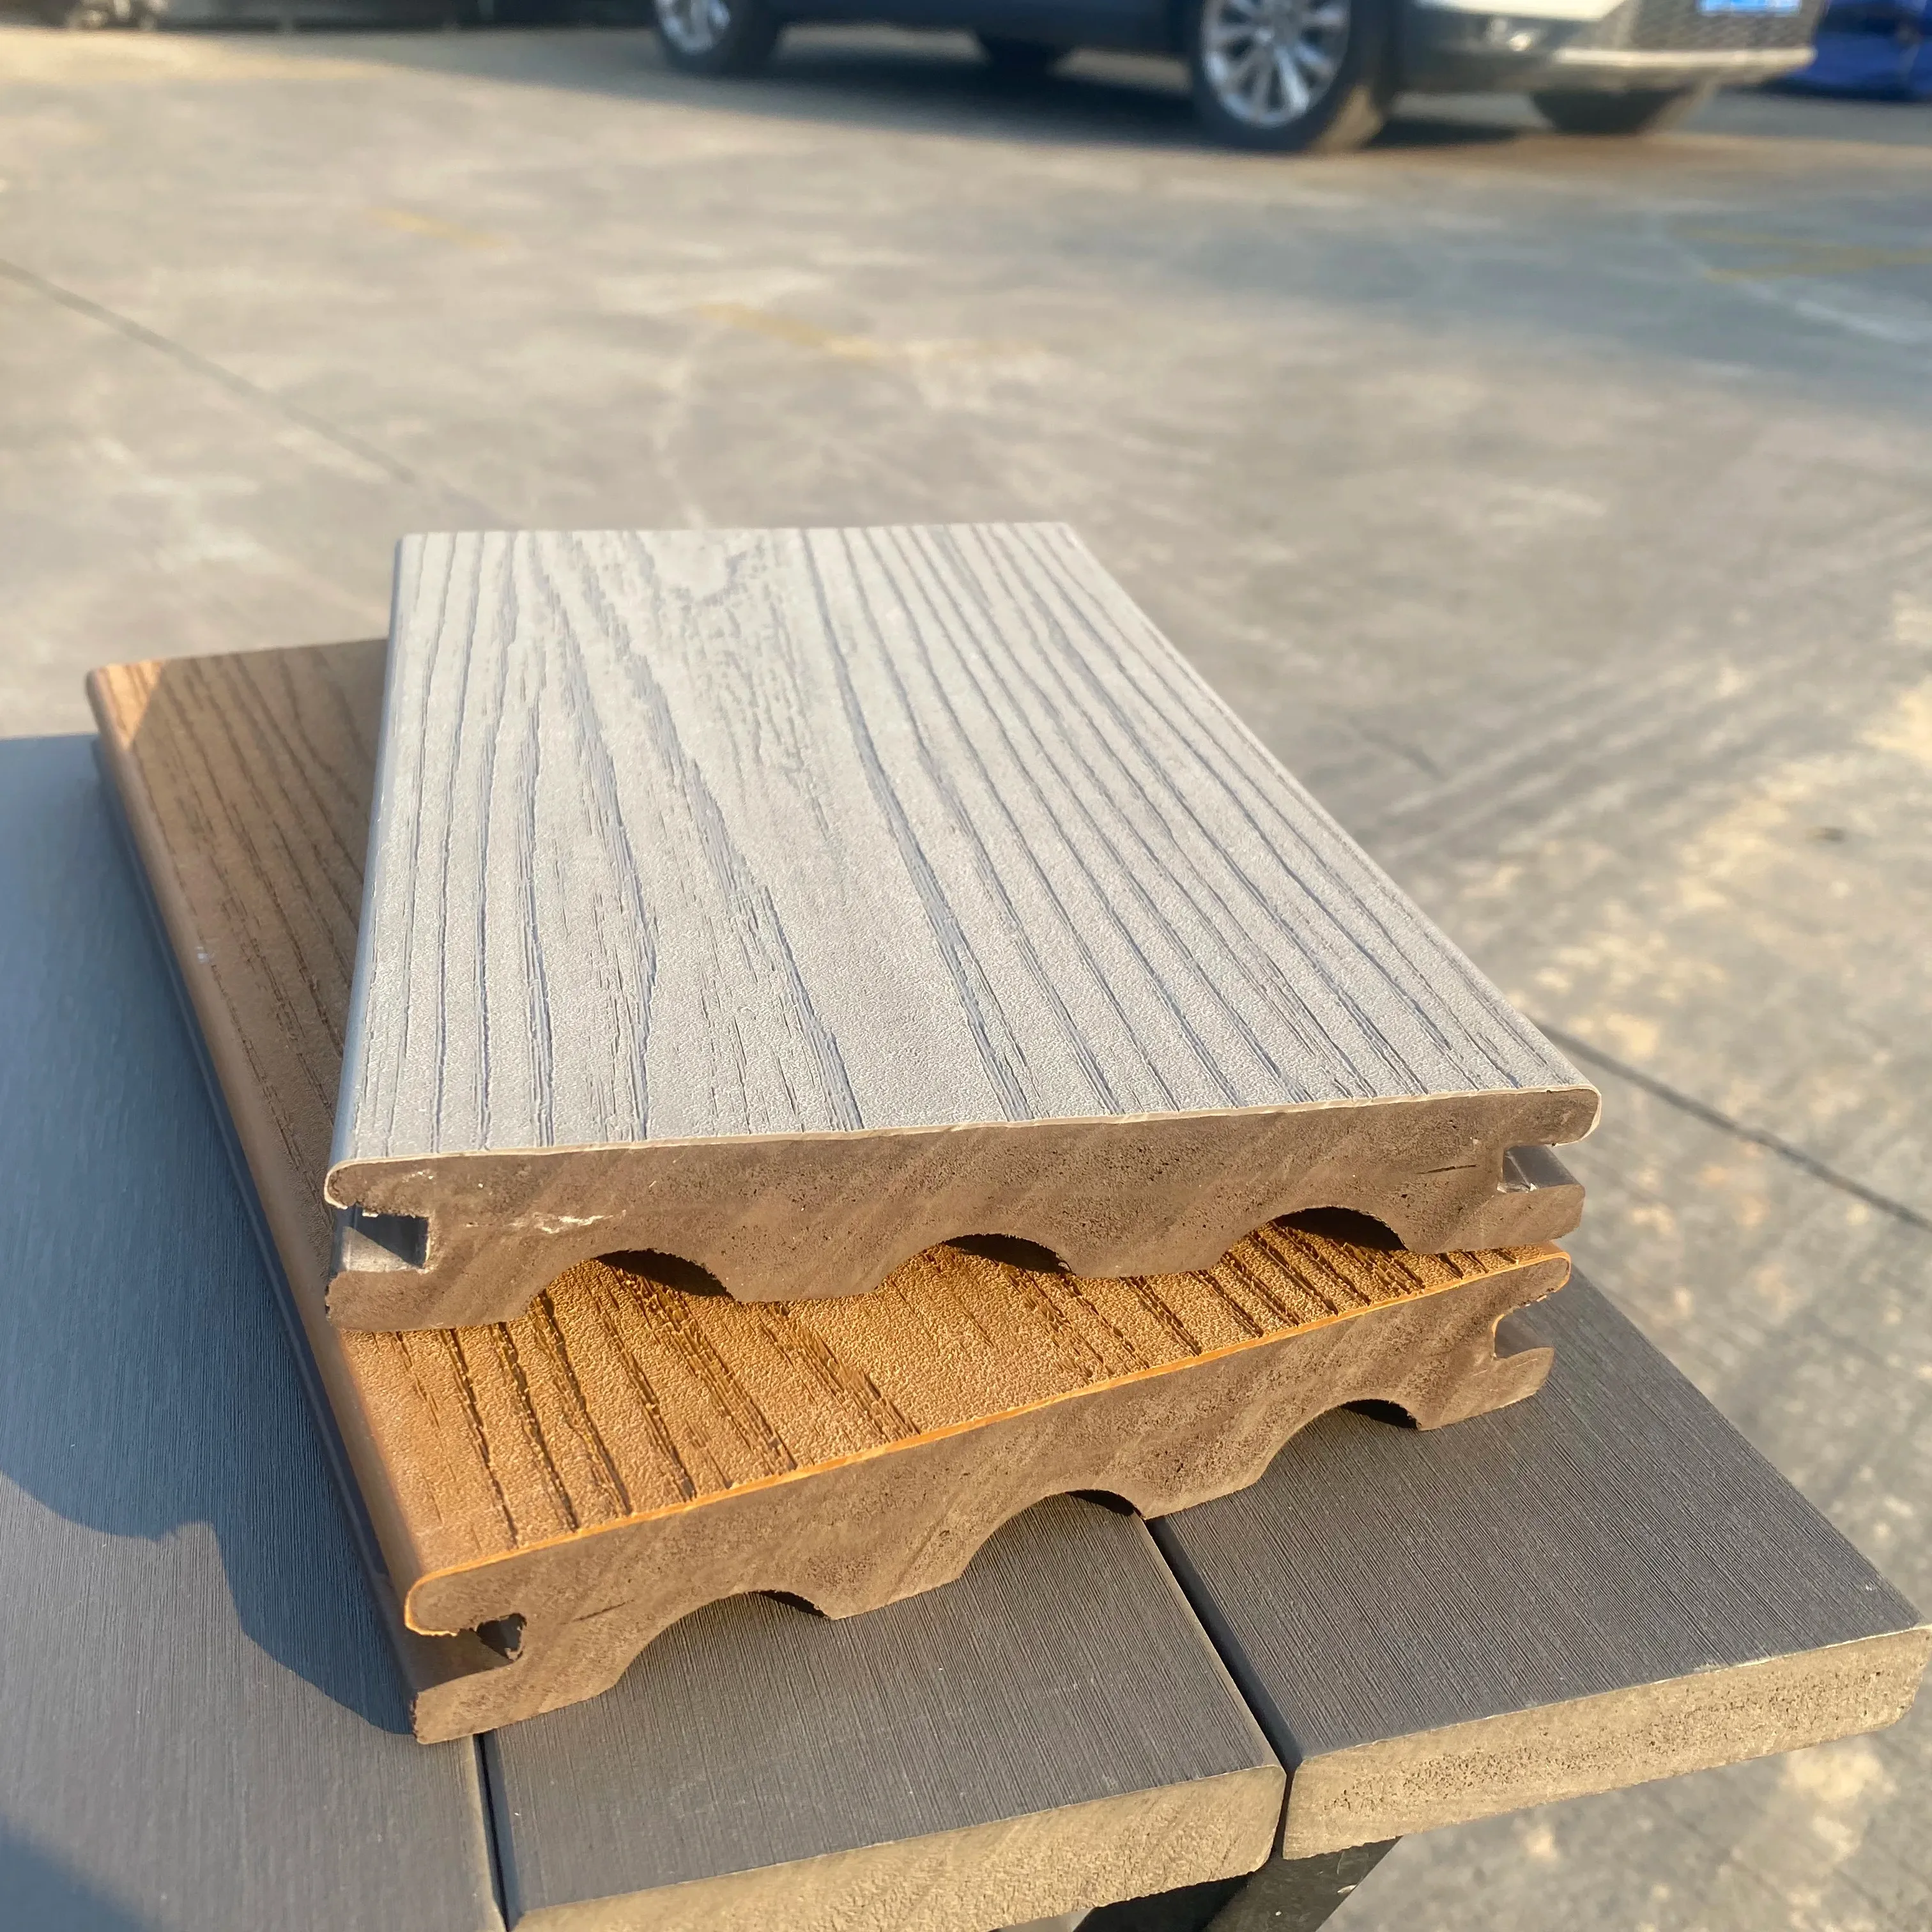 Precio DE FÁBRICA DE China, cubierta de grano de madera, cubierta de PVC para exteriores, cubierta compuesta flotante de madera de Pvc para exteriores